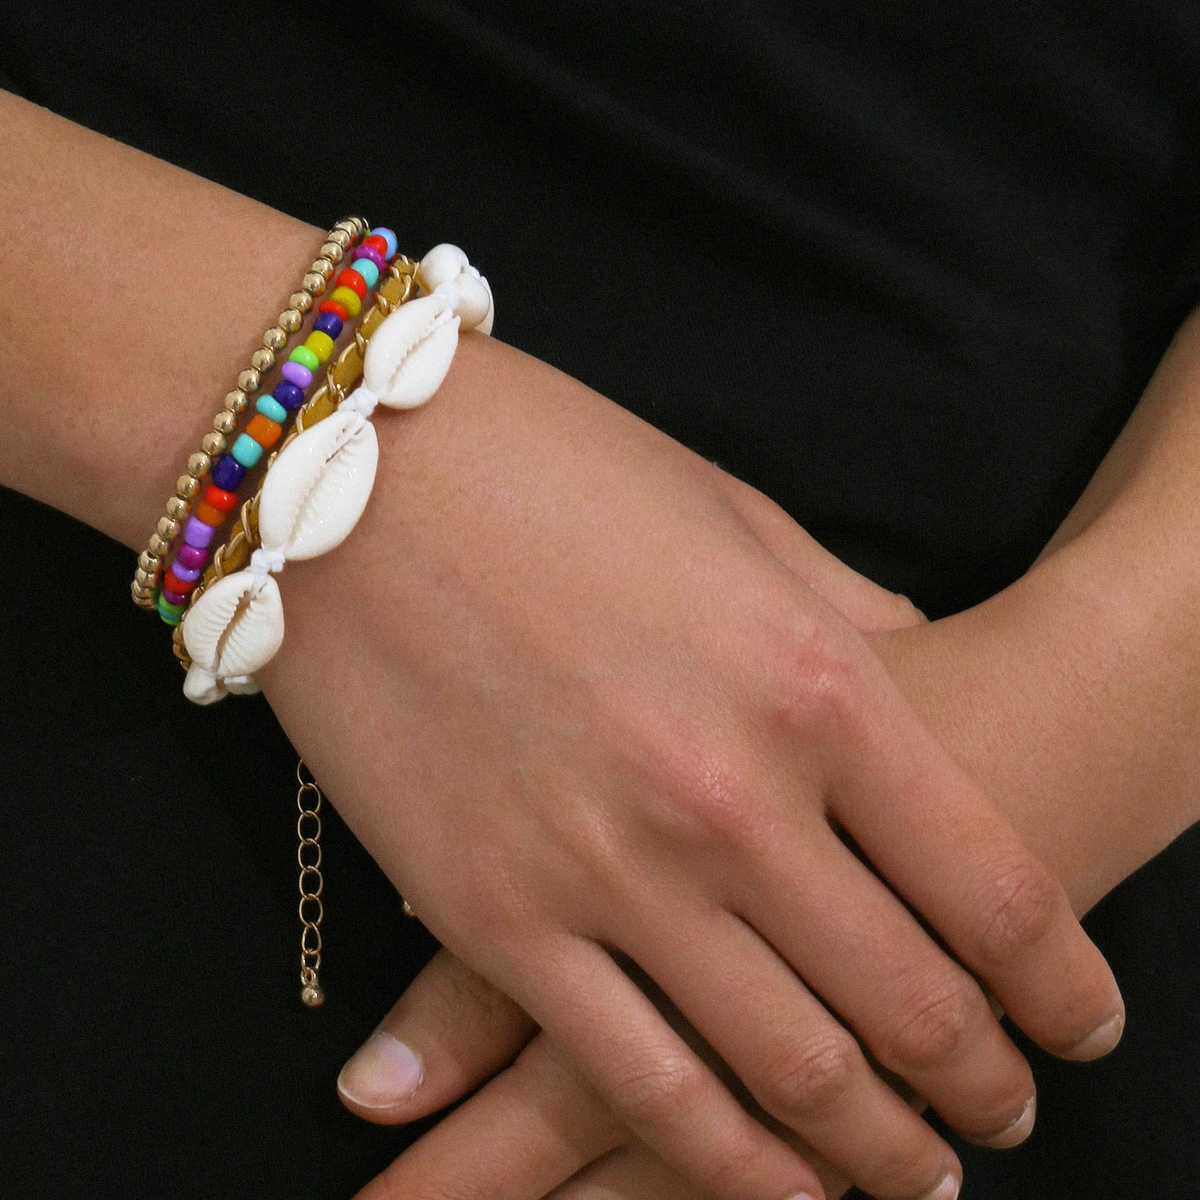 VRIUA Stock 4Pcs/Set Adjustable Natural Shell Bracelets Charm Rainbow Colorful Seed Bead Bracelets Bangles Wrist Chain Jewelry